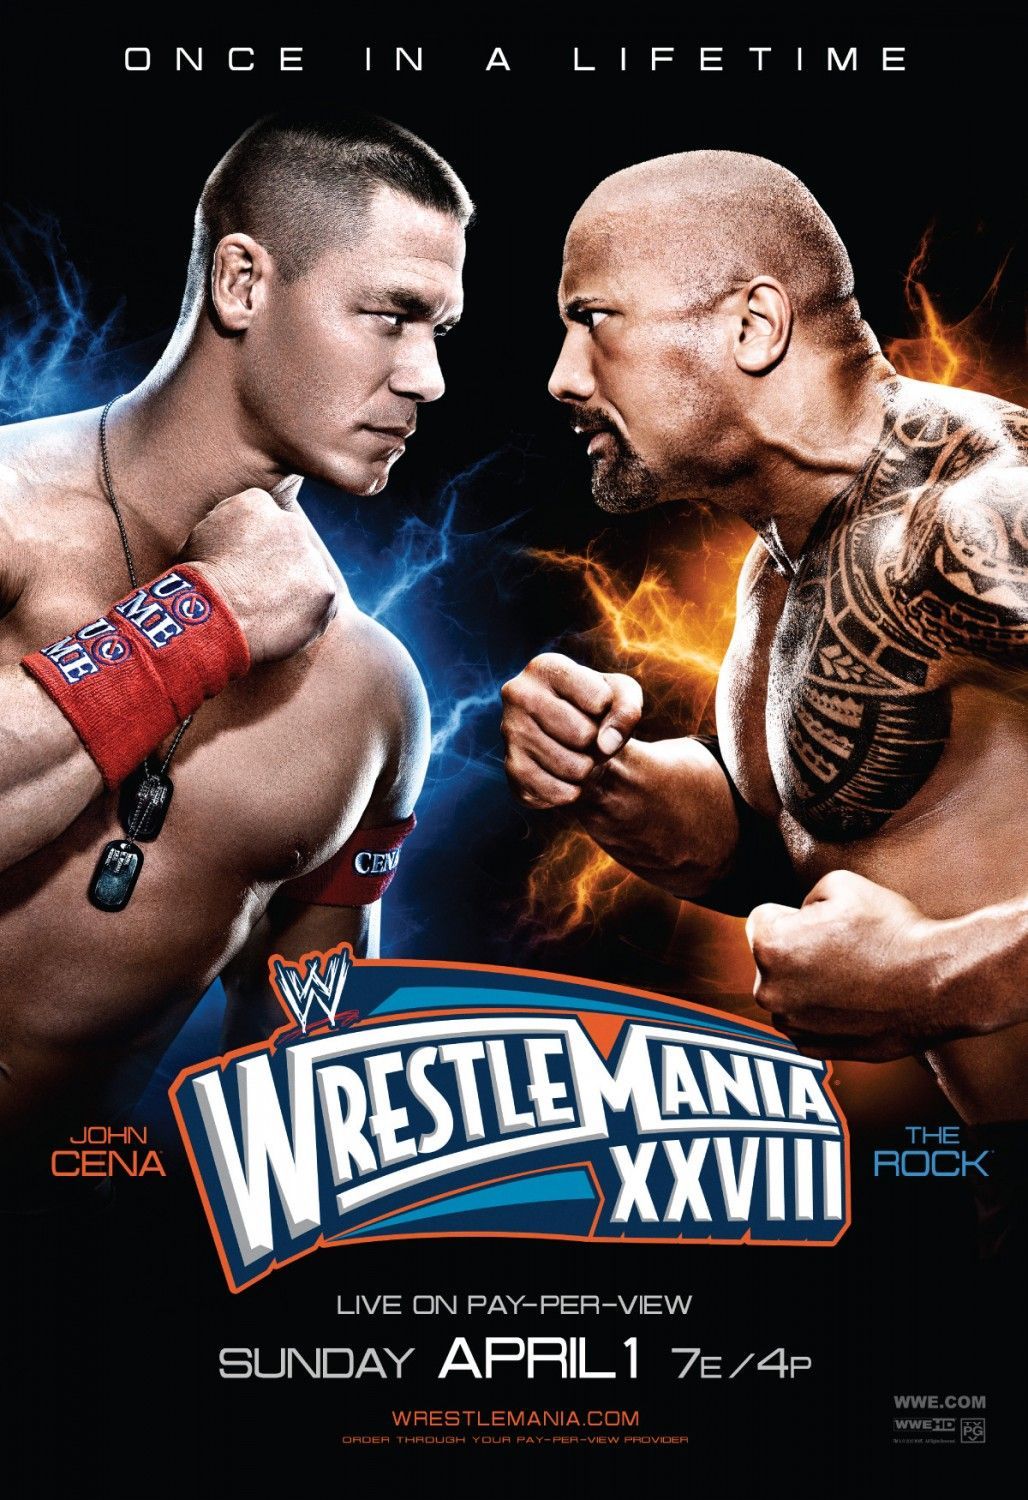 Wrestlemania 28 John Cena vs. The Rock. Wrestlemania, Wwe the rock, Wwe